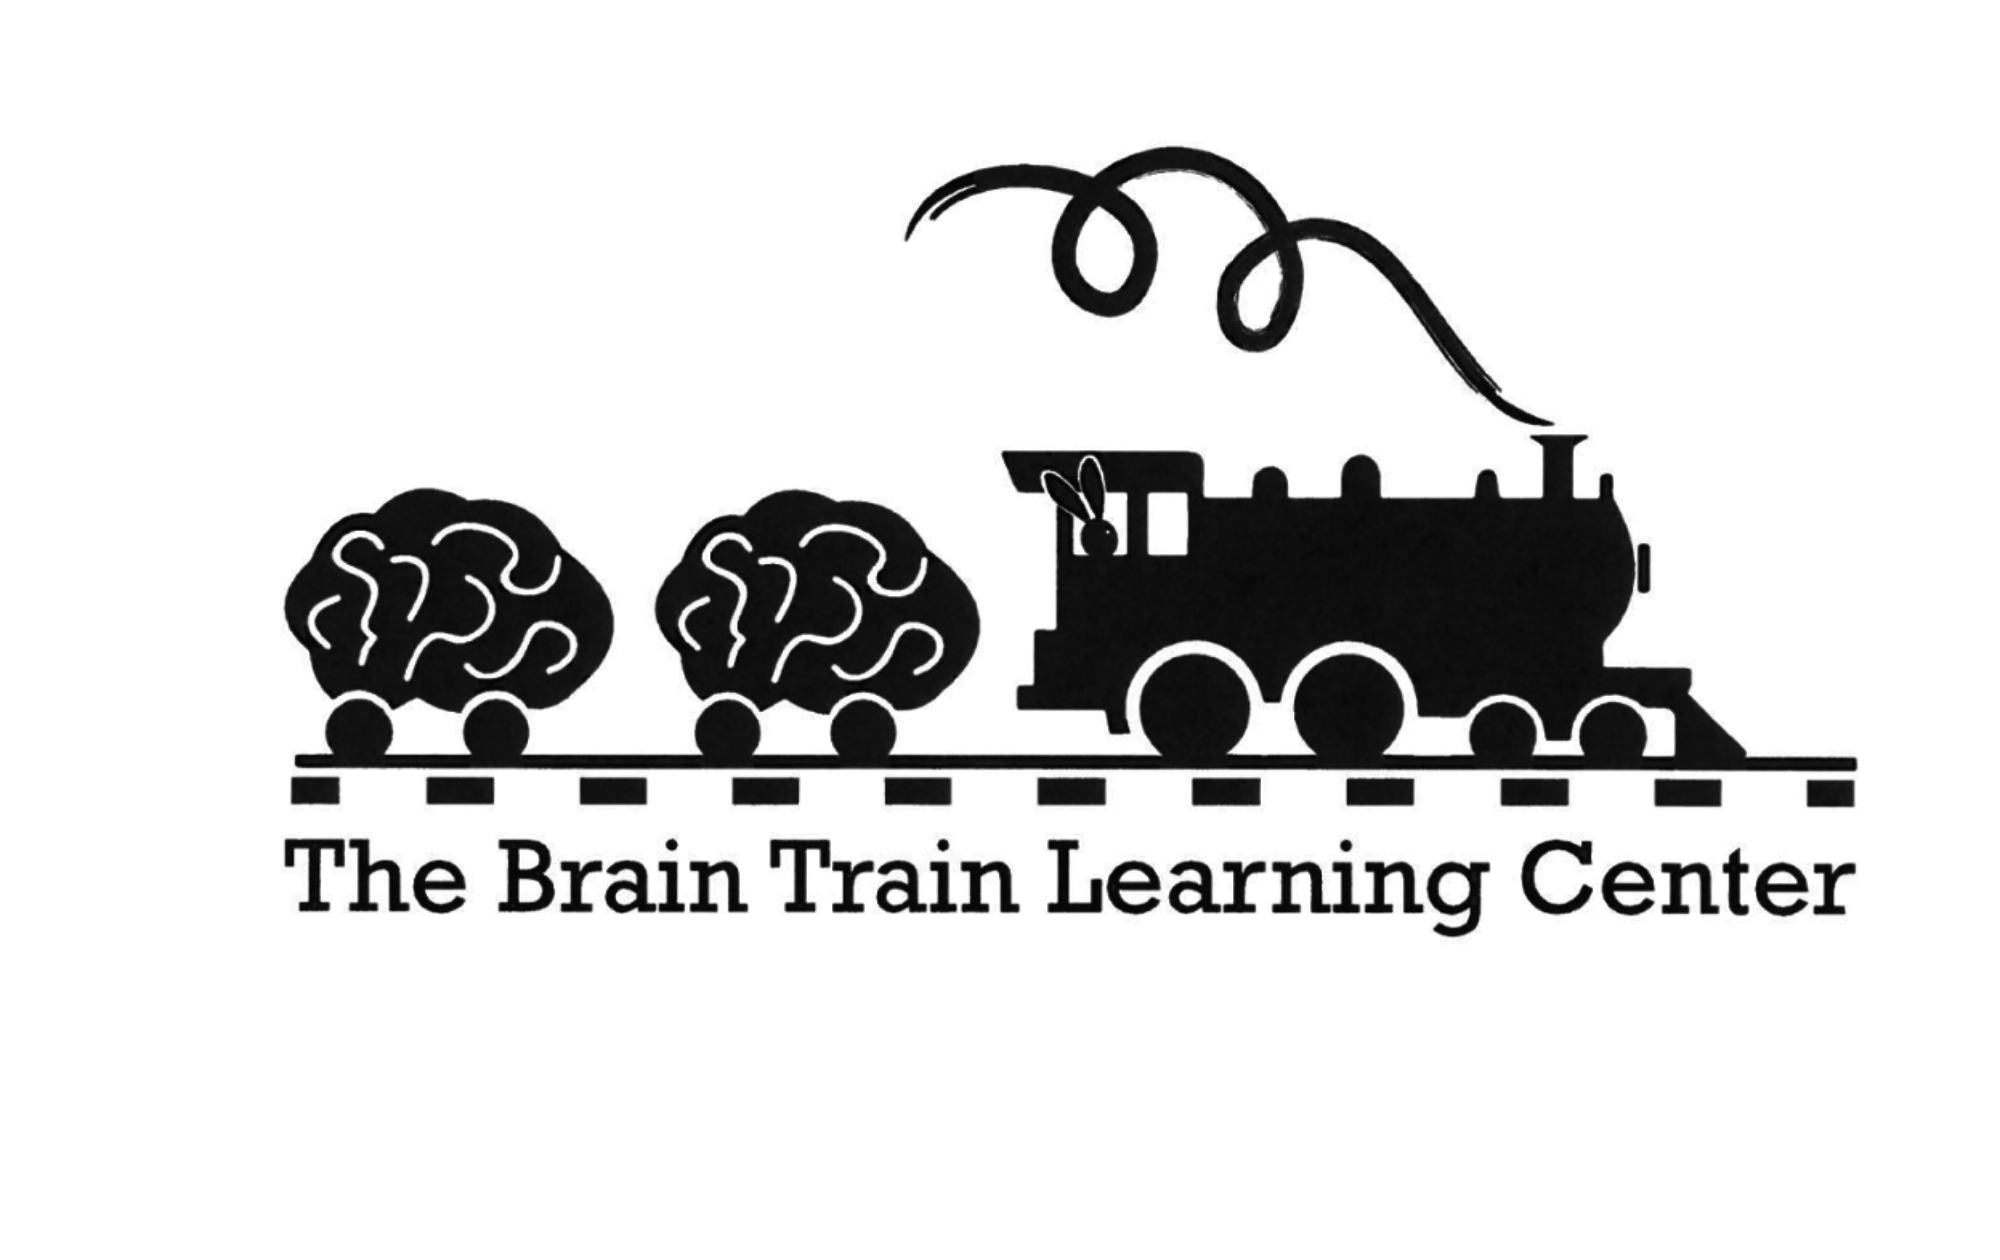 The Brain Train Learning Center